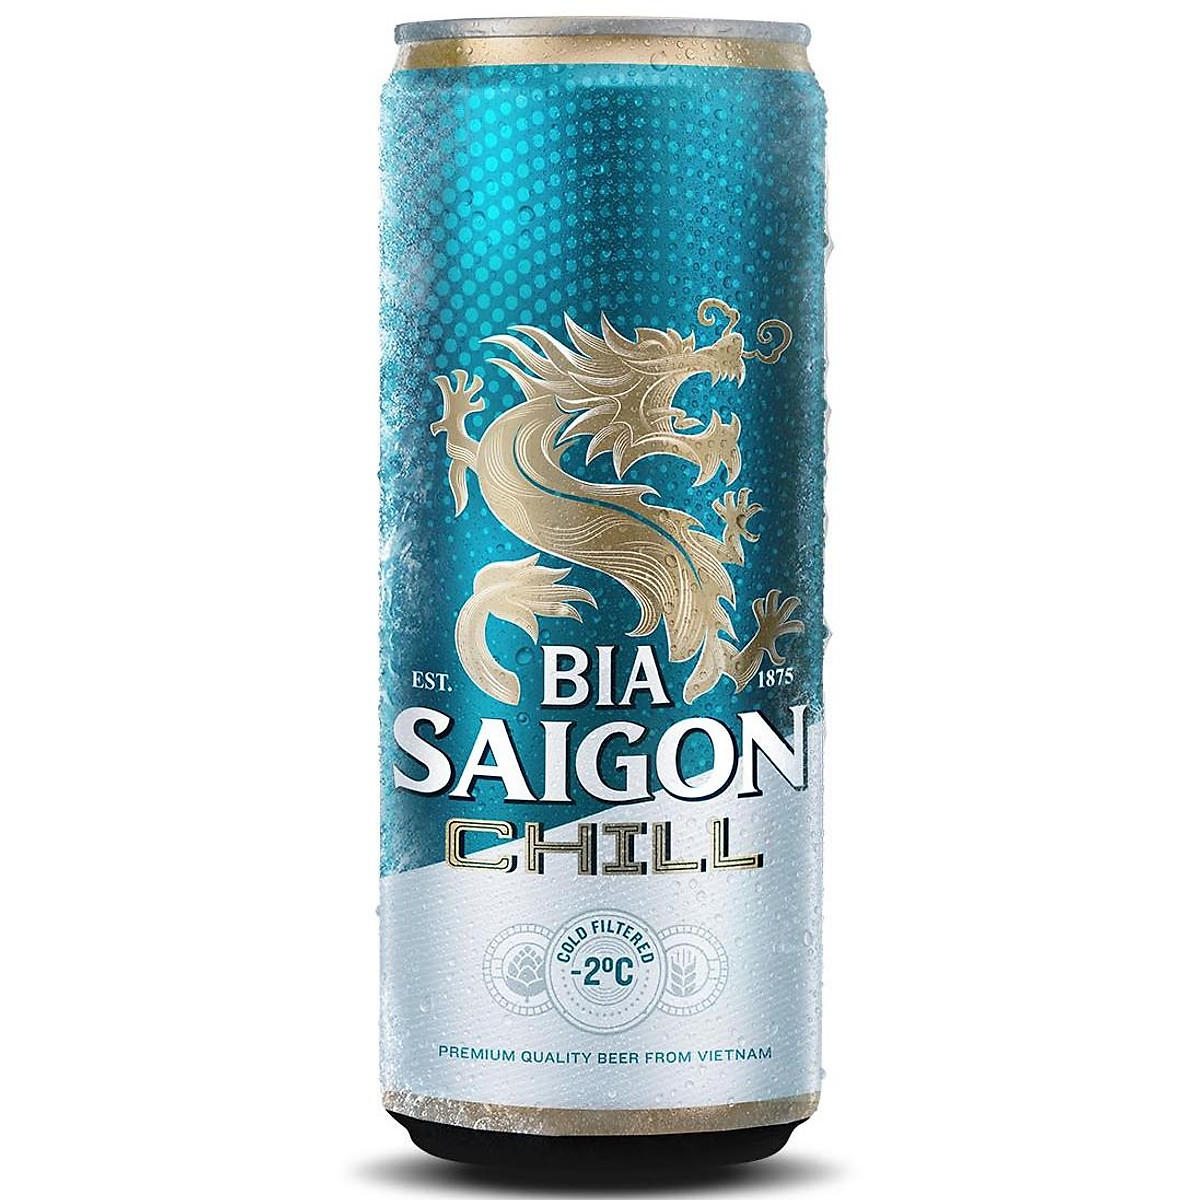 Lon bia Saigon Chill 330ml - Bia, cider